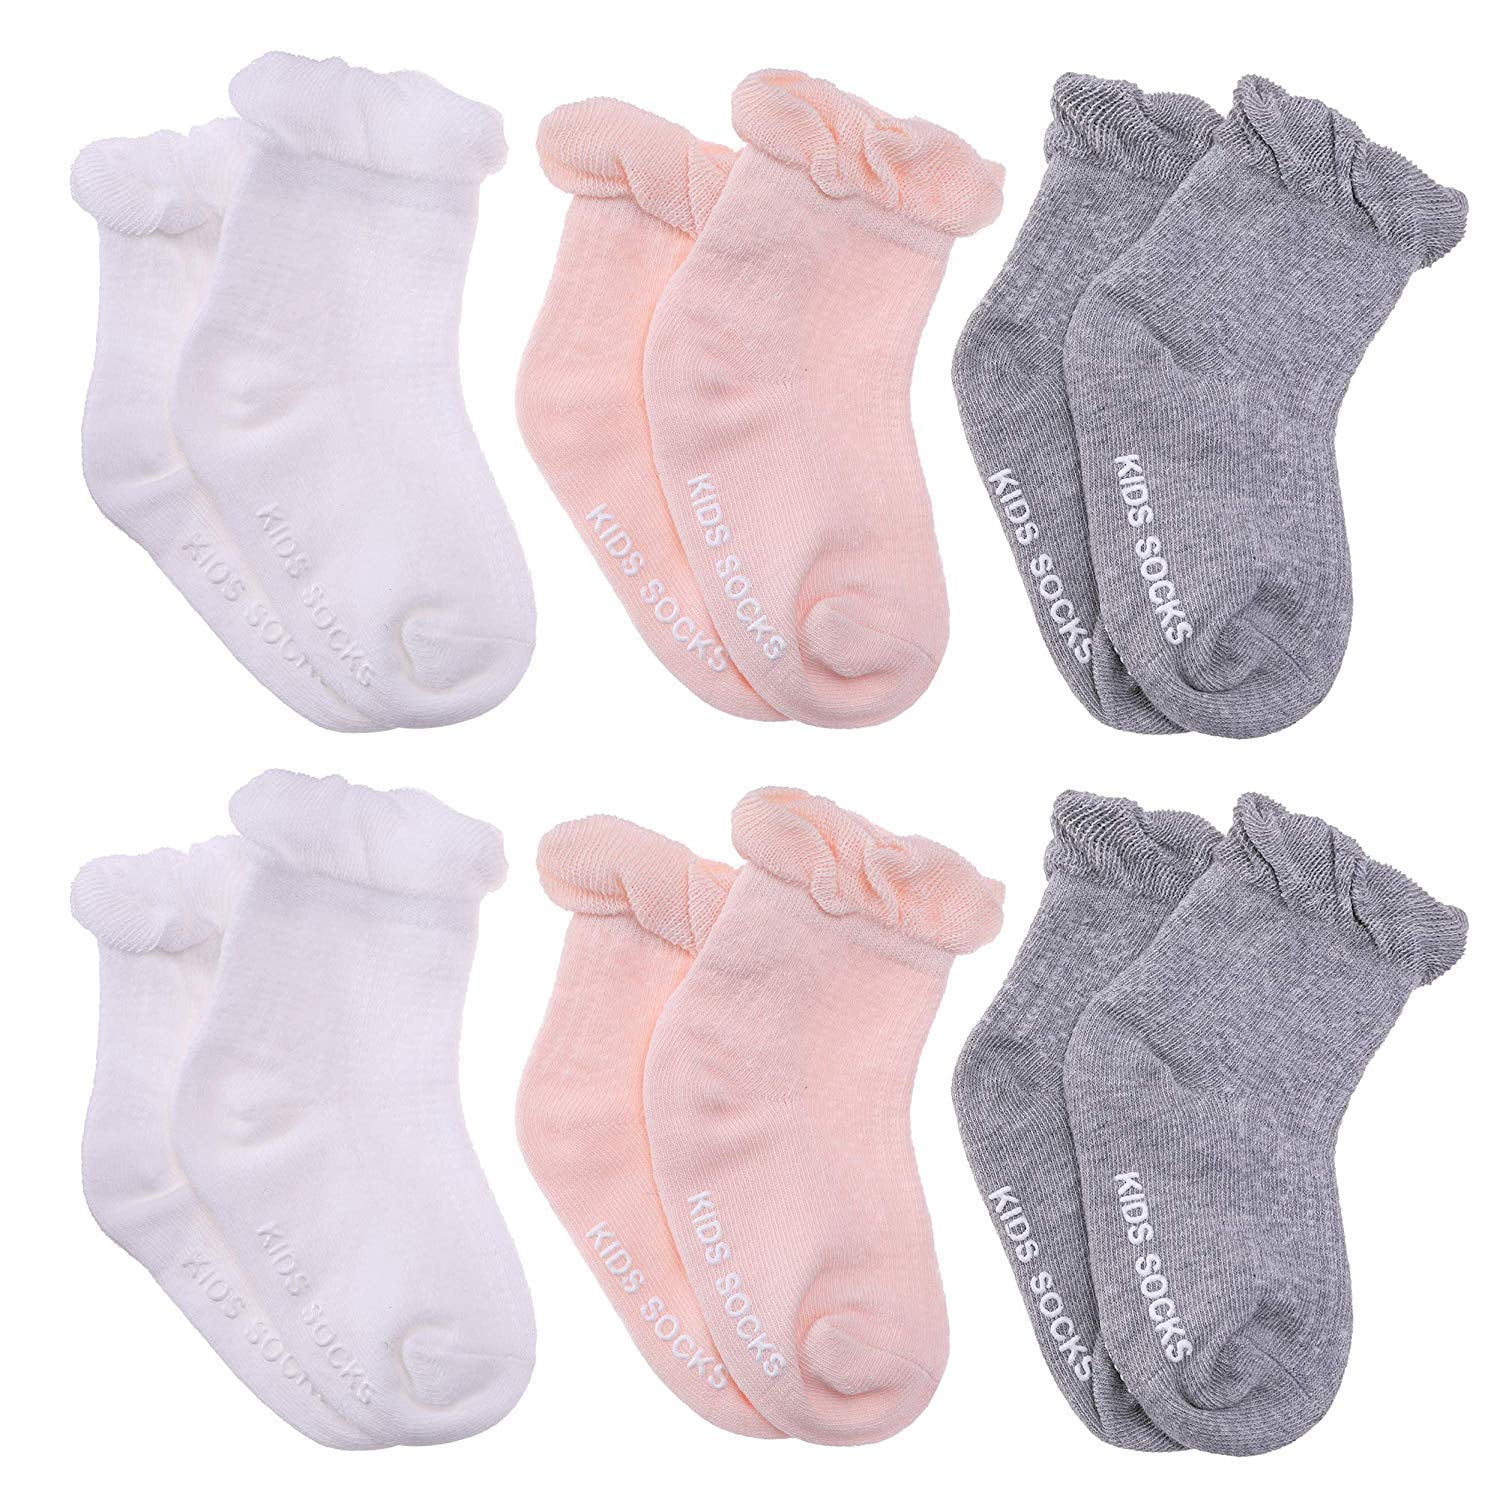 anti skid socks for babies